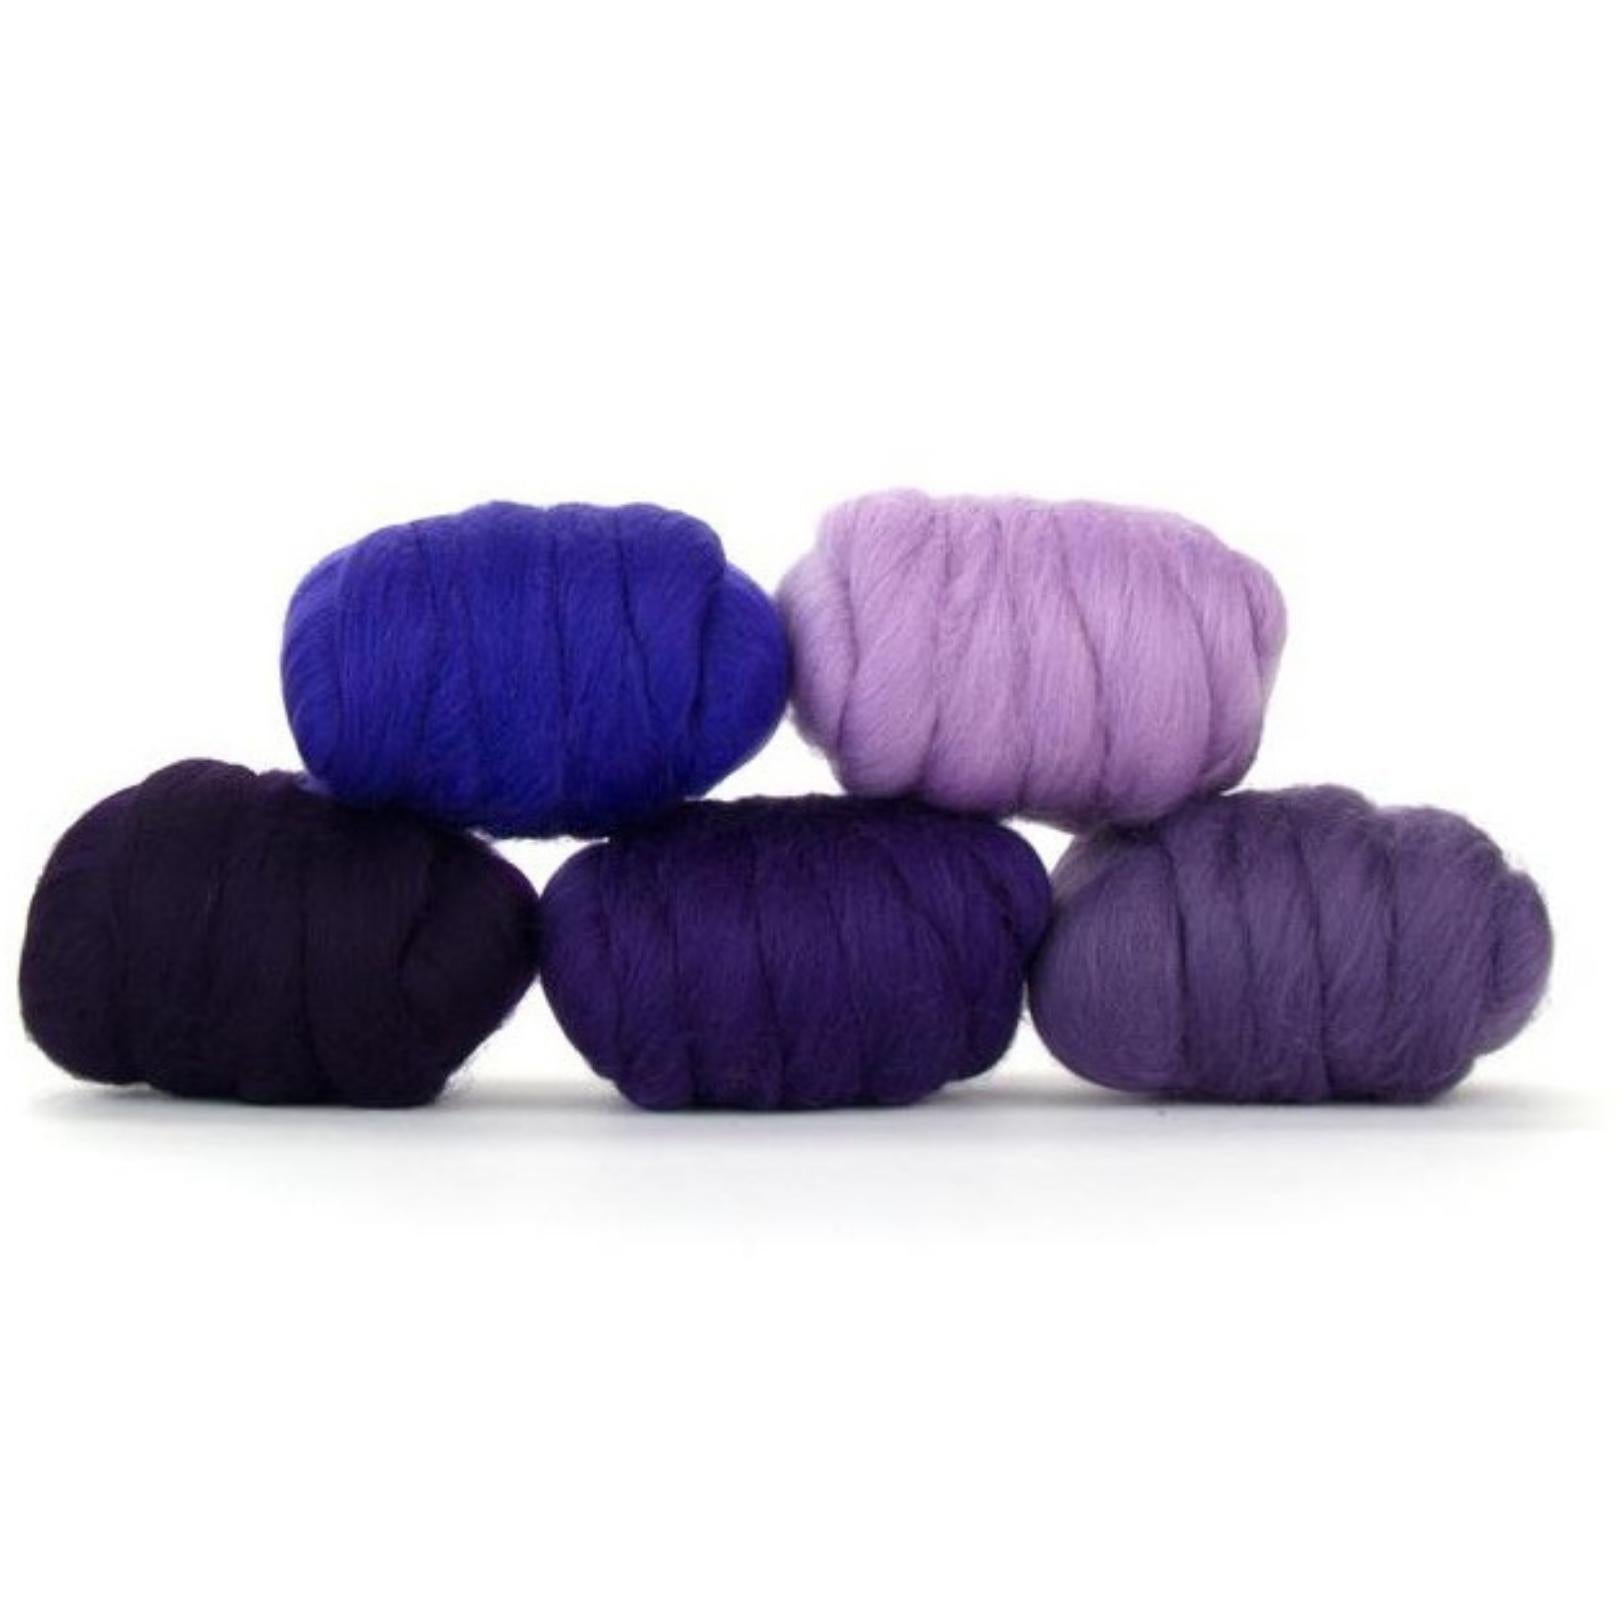 Mixed Merino Wool Variety Pack  Purple Disco (Purples) 250 Grams